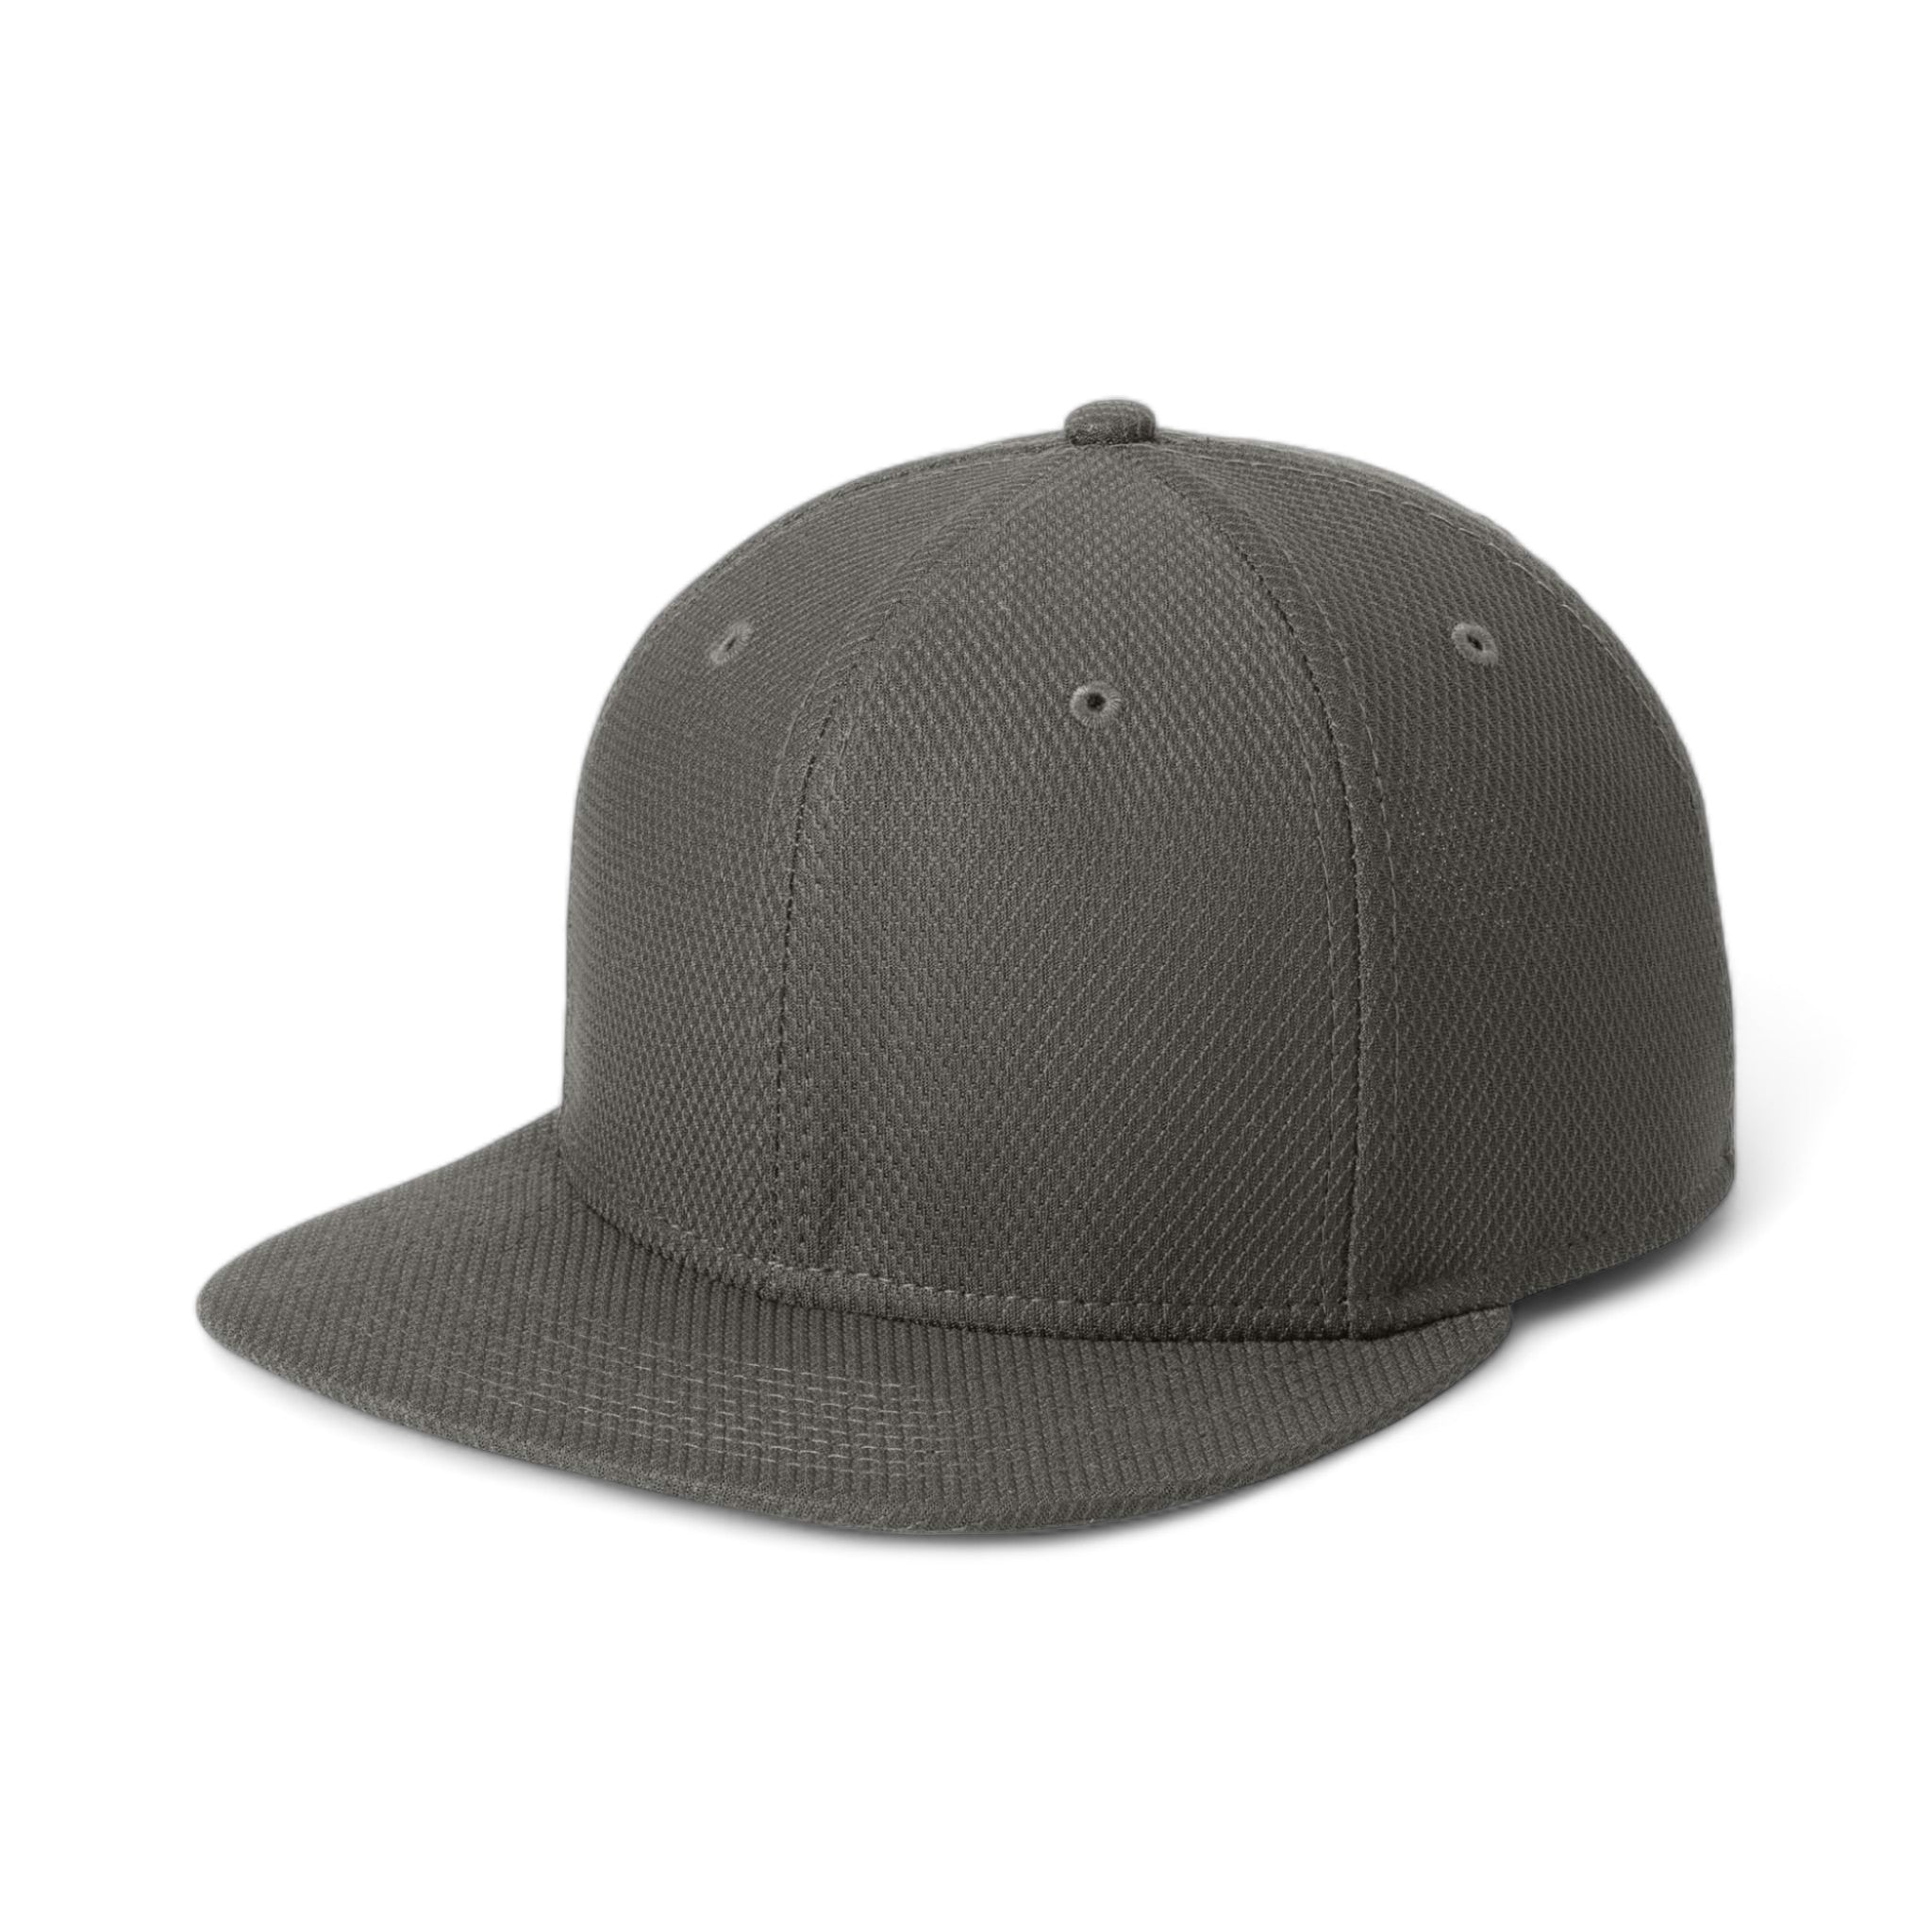 Side view of New Era NE404 custom hat in graphite